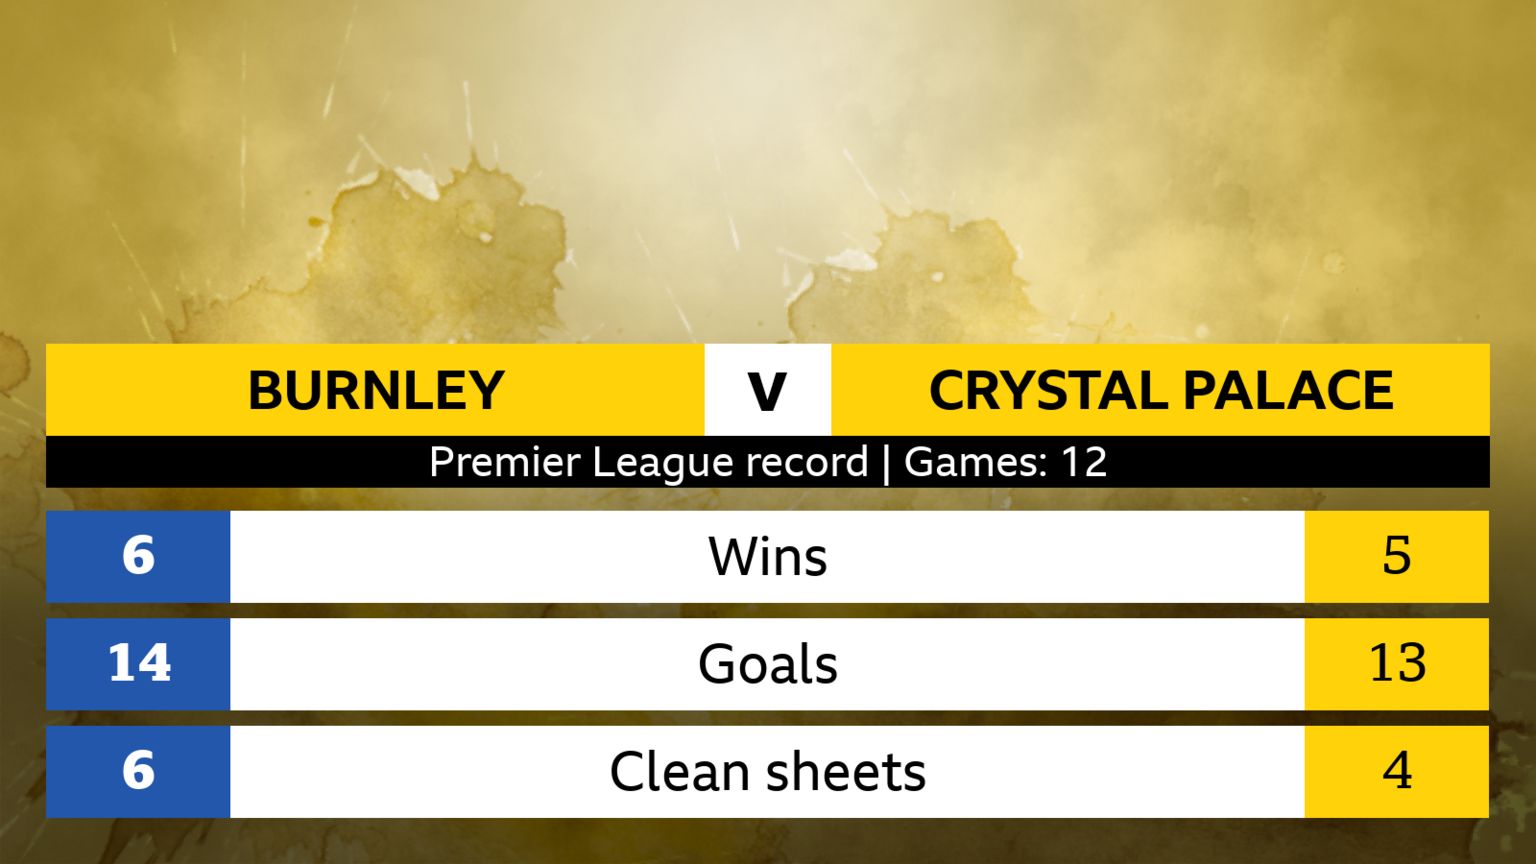 Burnley v Crystal Palace, 12 games. Burnley; 6 wins, 14 goals, 6 clean sheets. Crystal Palace 5 wins, 13 goals, 4 clean sheets.